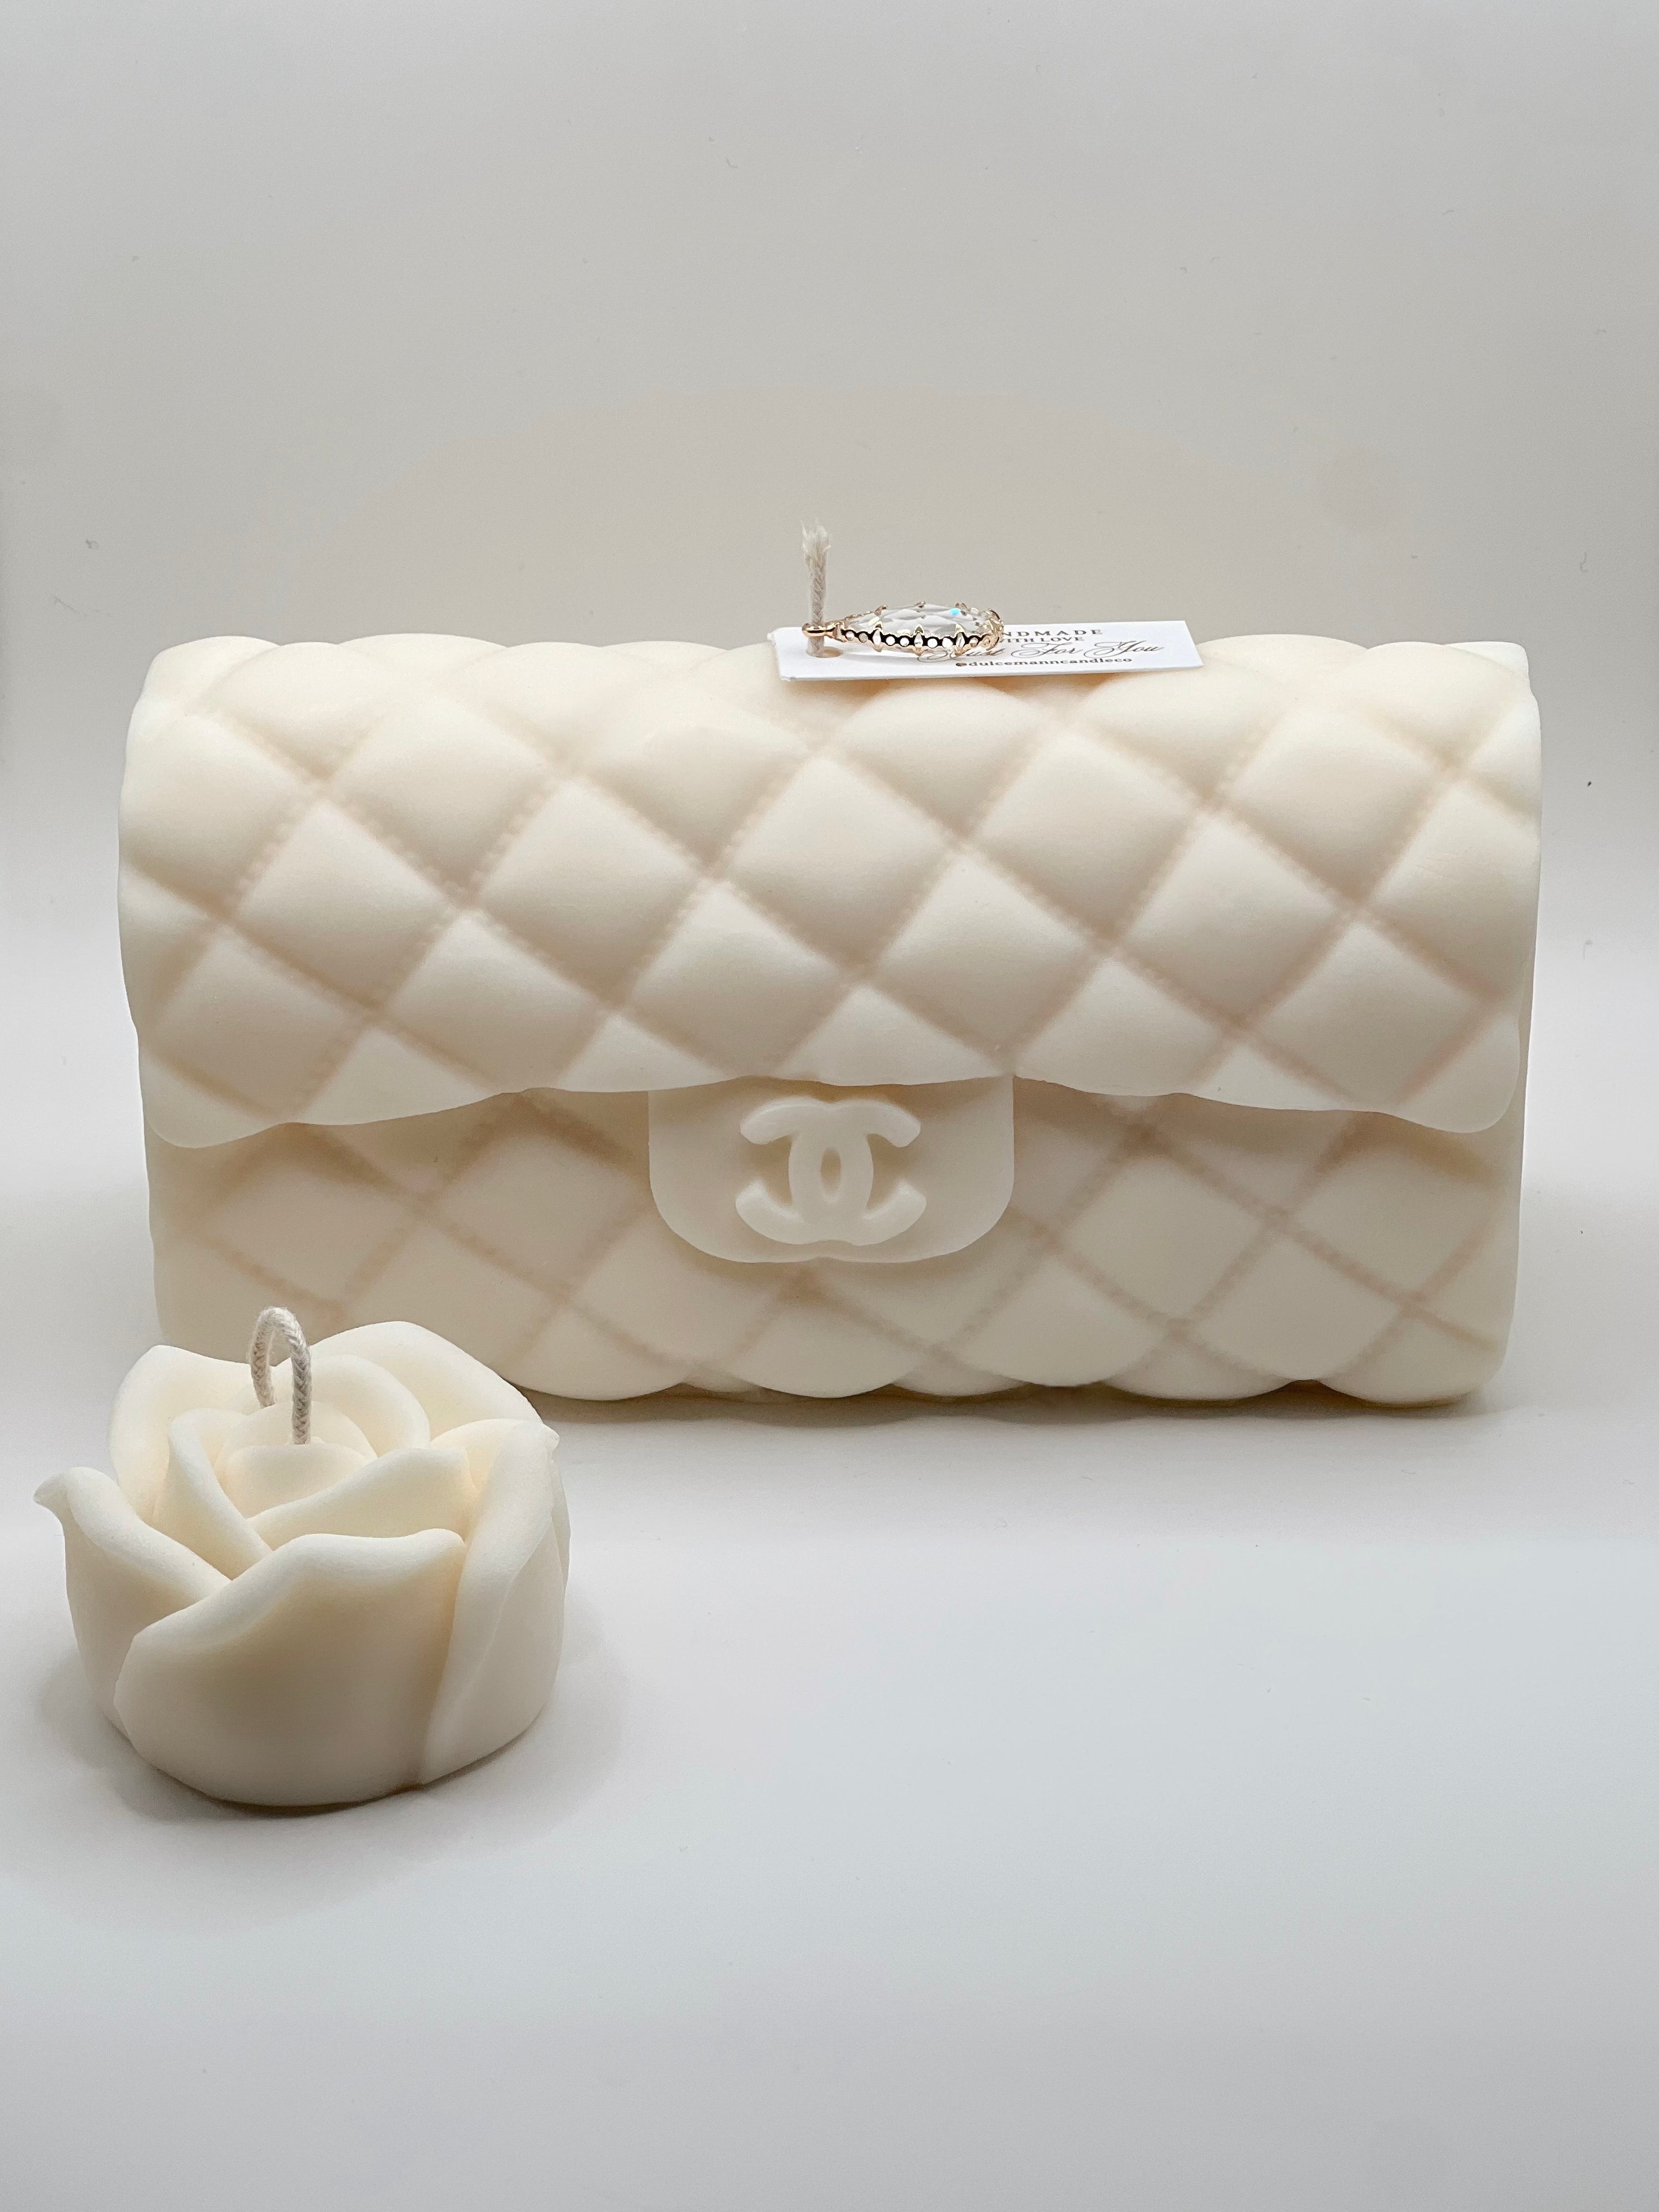 Chanel Handbag Candle